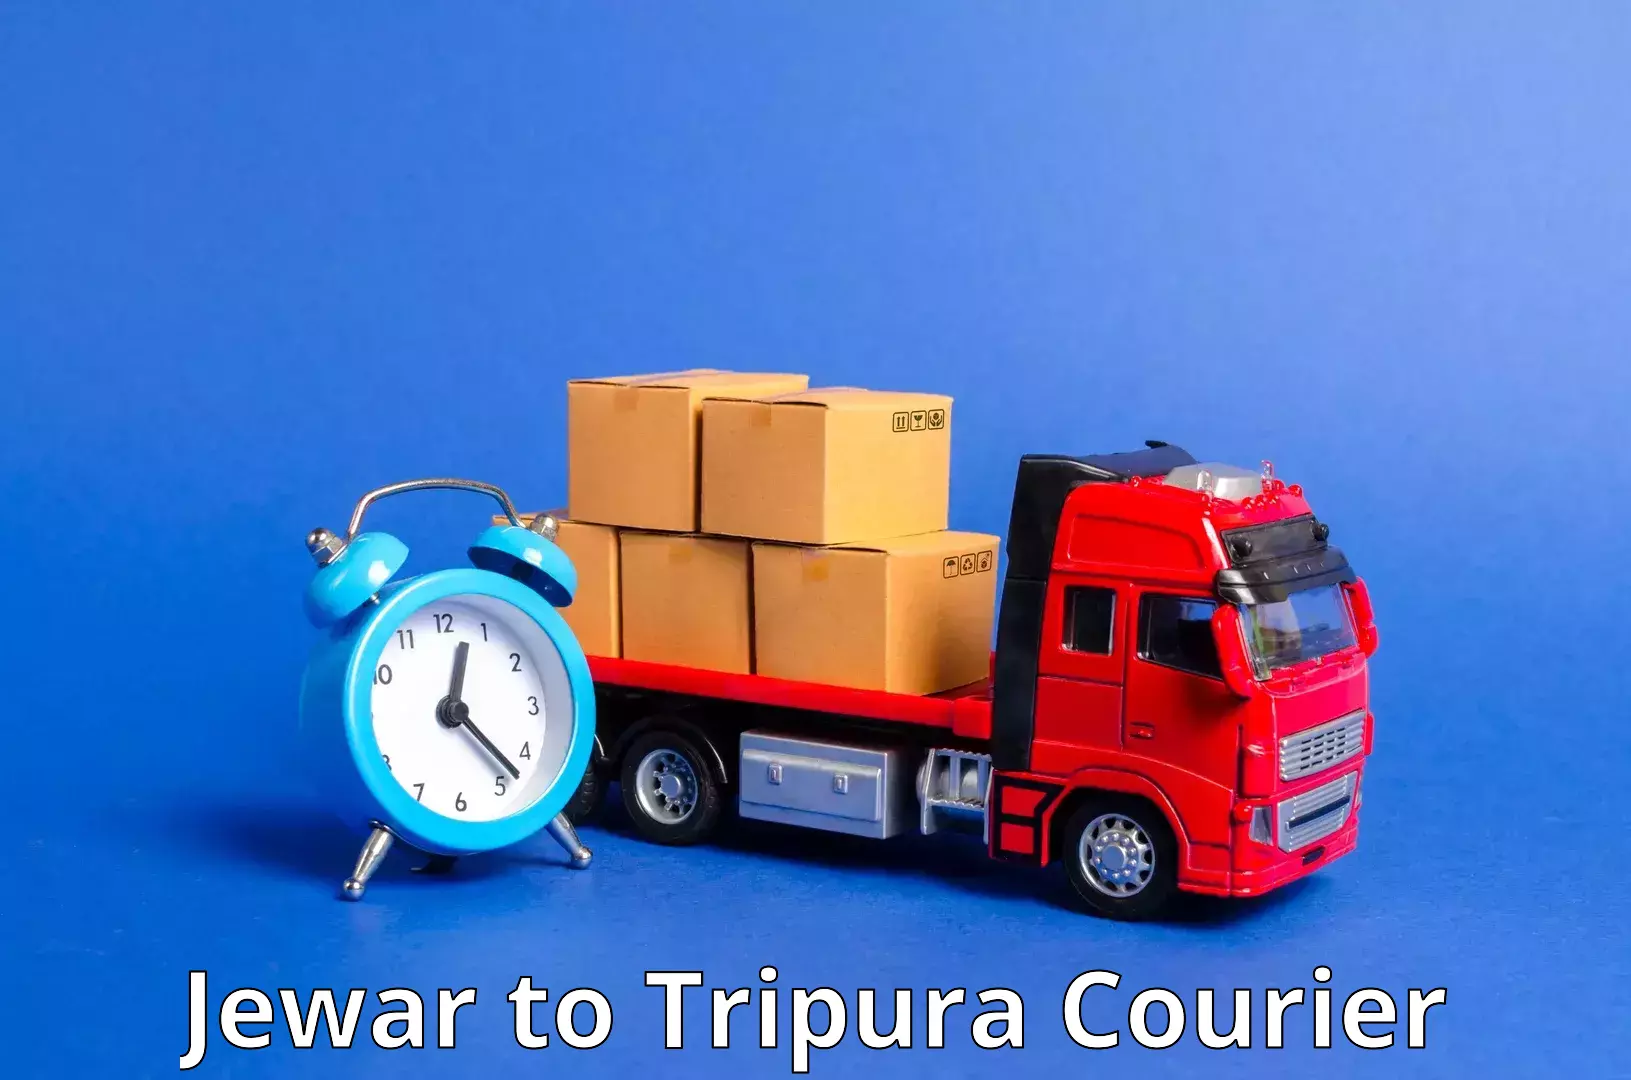 Remote area delivery Jewar to Udaipur Tripura